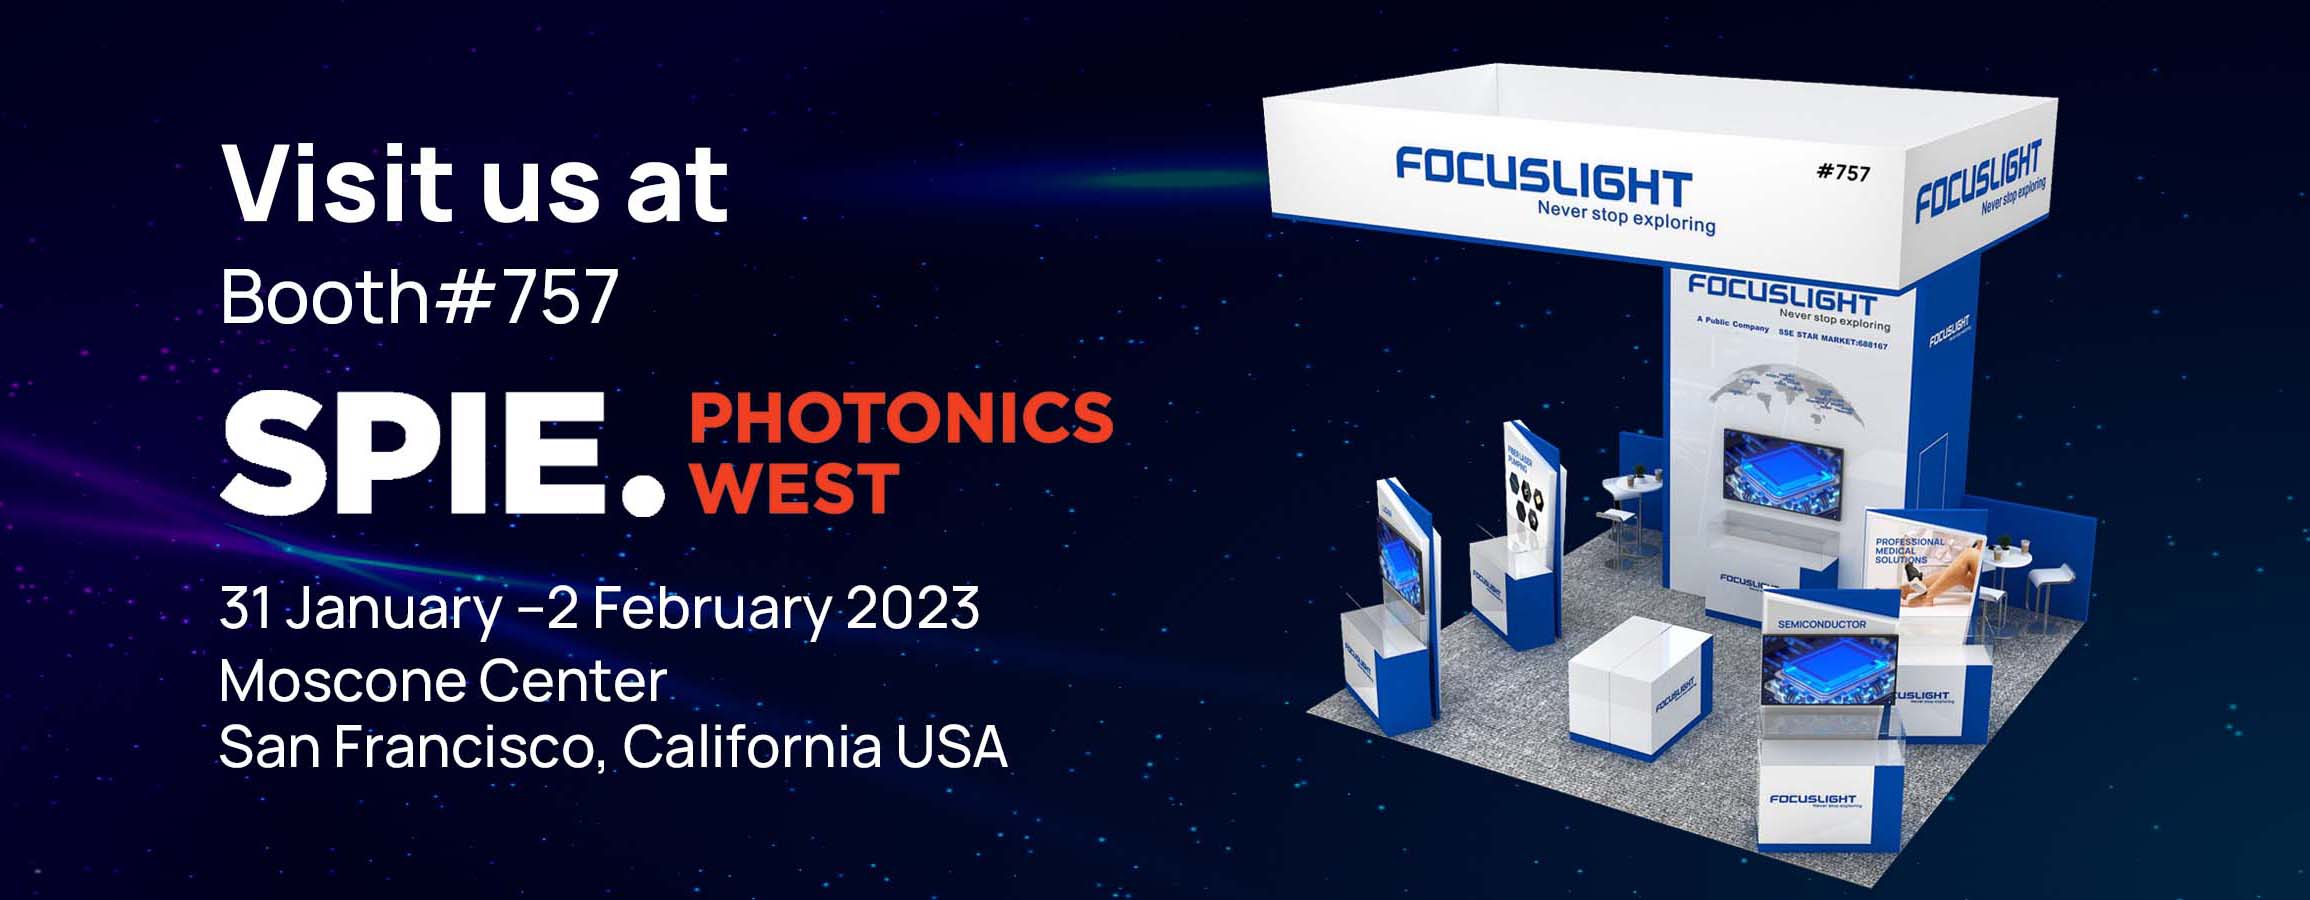 Focuslight Exhibited at SPIE Photonics West 2023